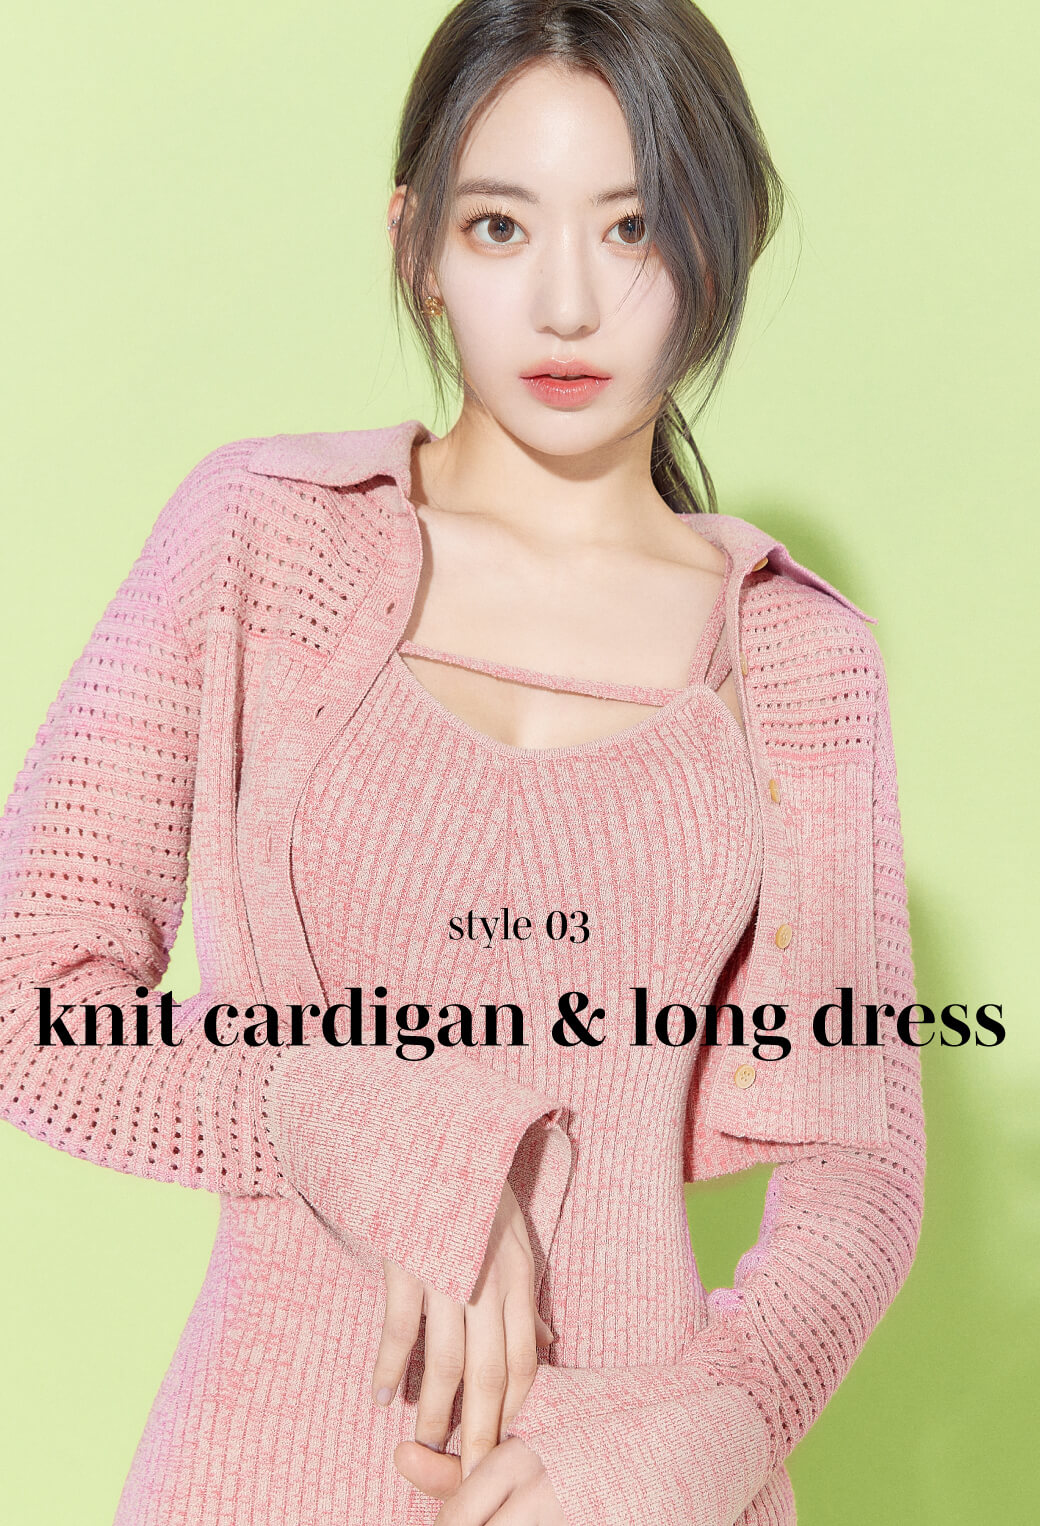 style03 knit cardigan & long dress